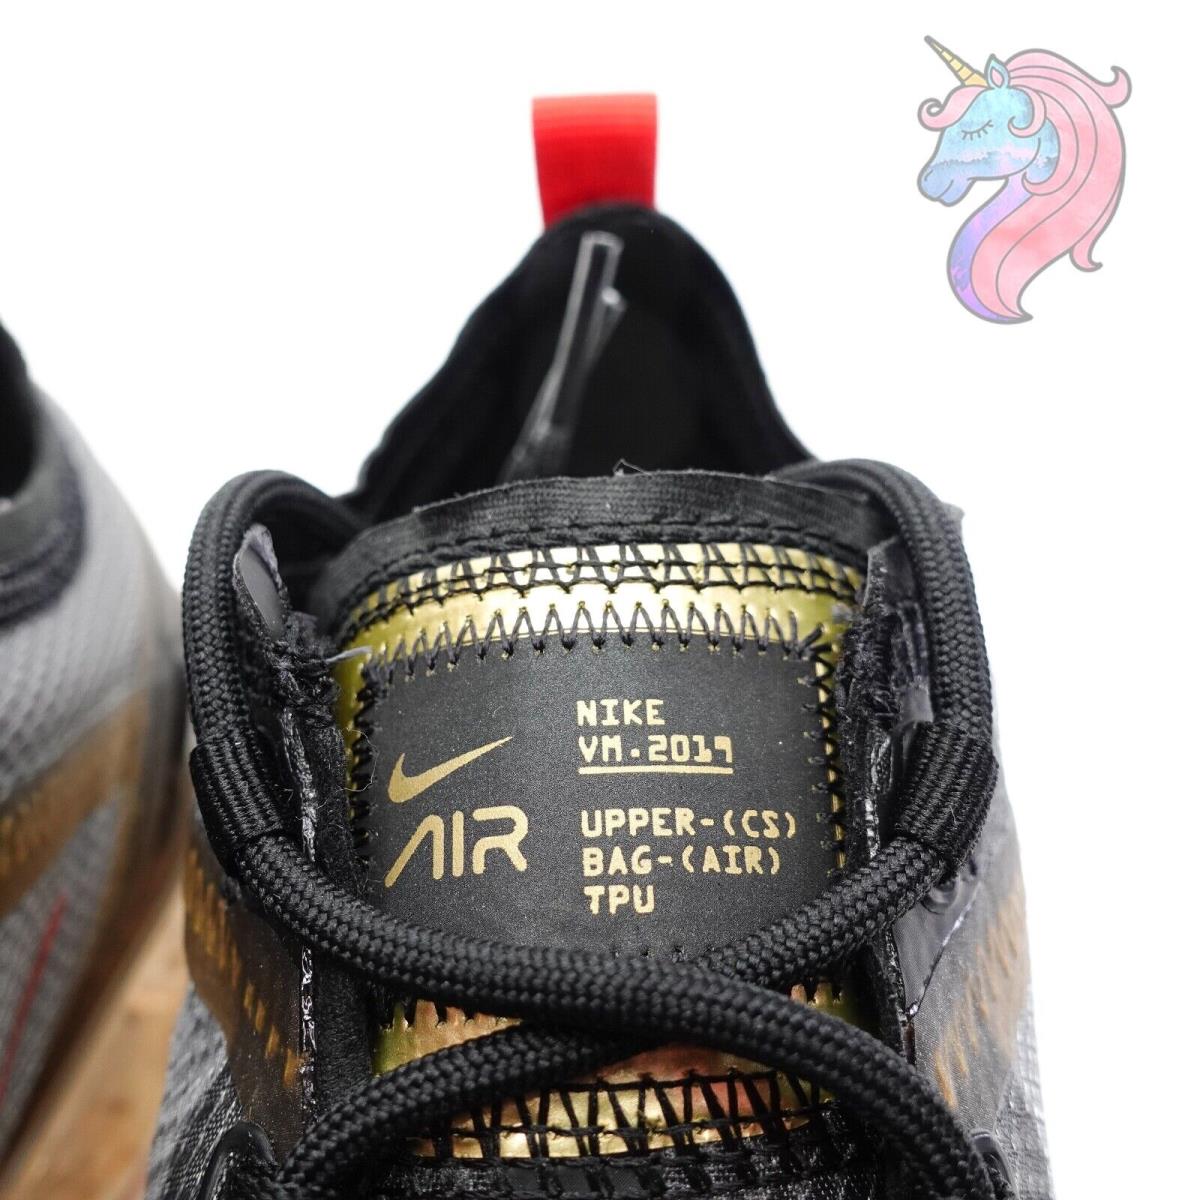 Nike shoes Air Vapormax - Black / Metallic Gold 5